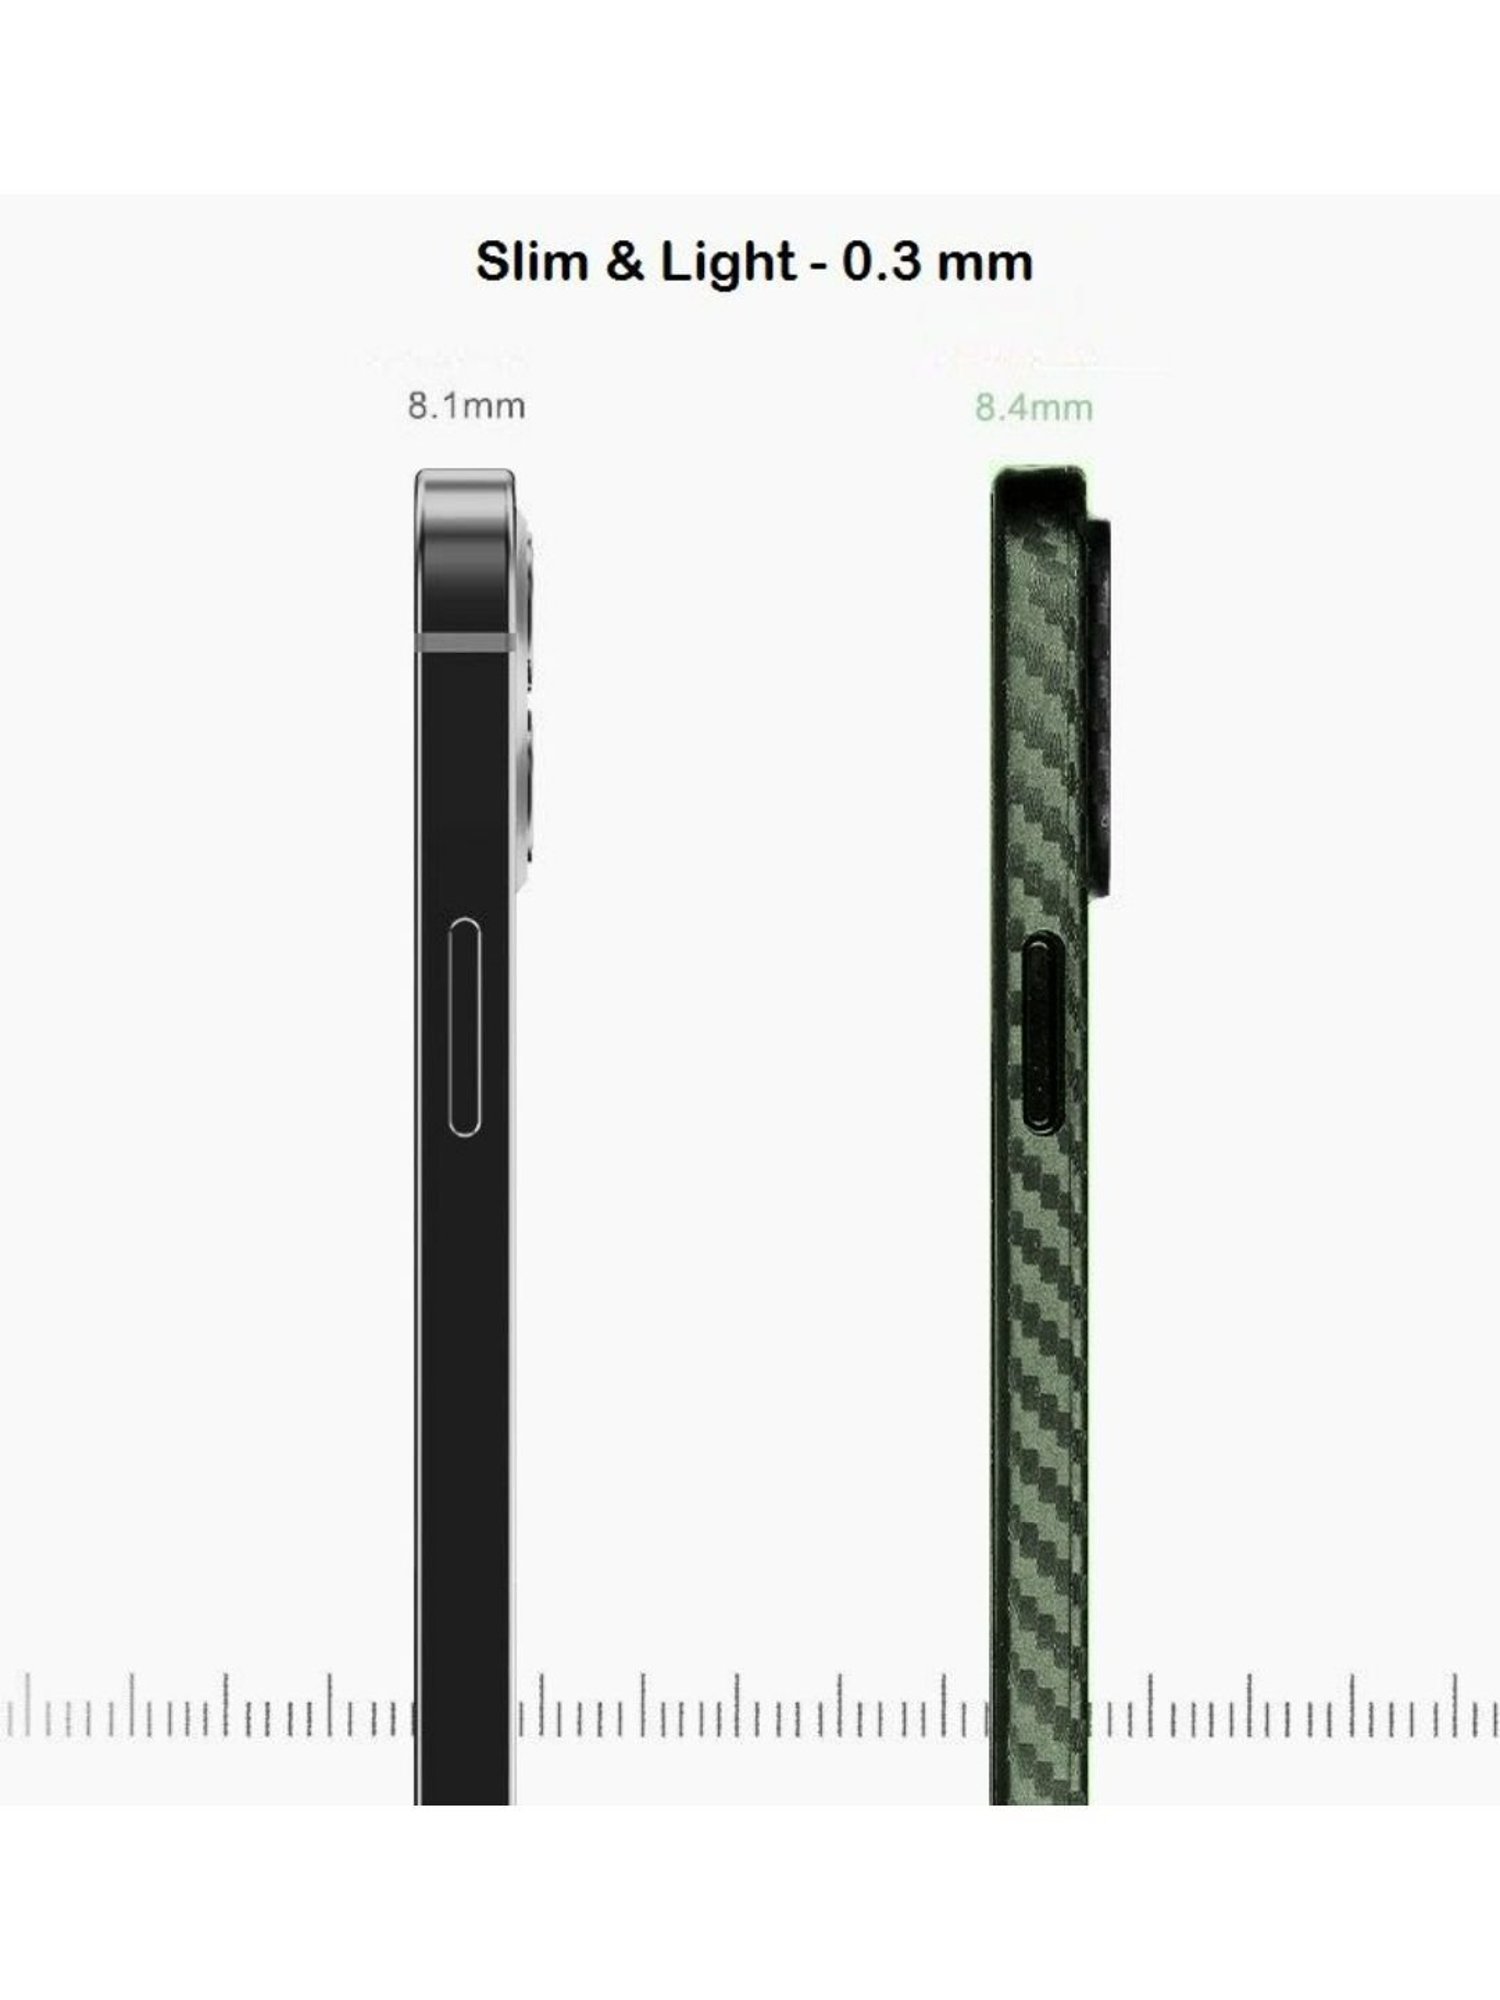 Memumi Case for iPhone 12 Ultra Slim 0.3mm Matte Back Cover for